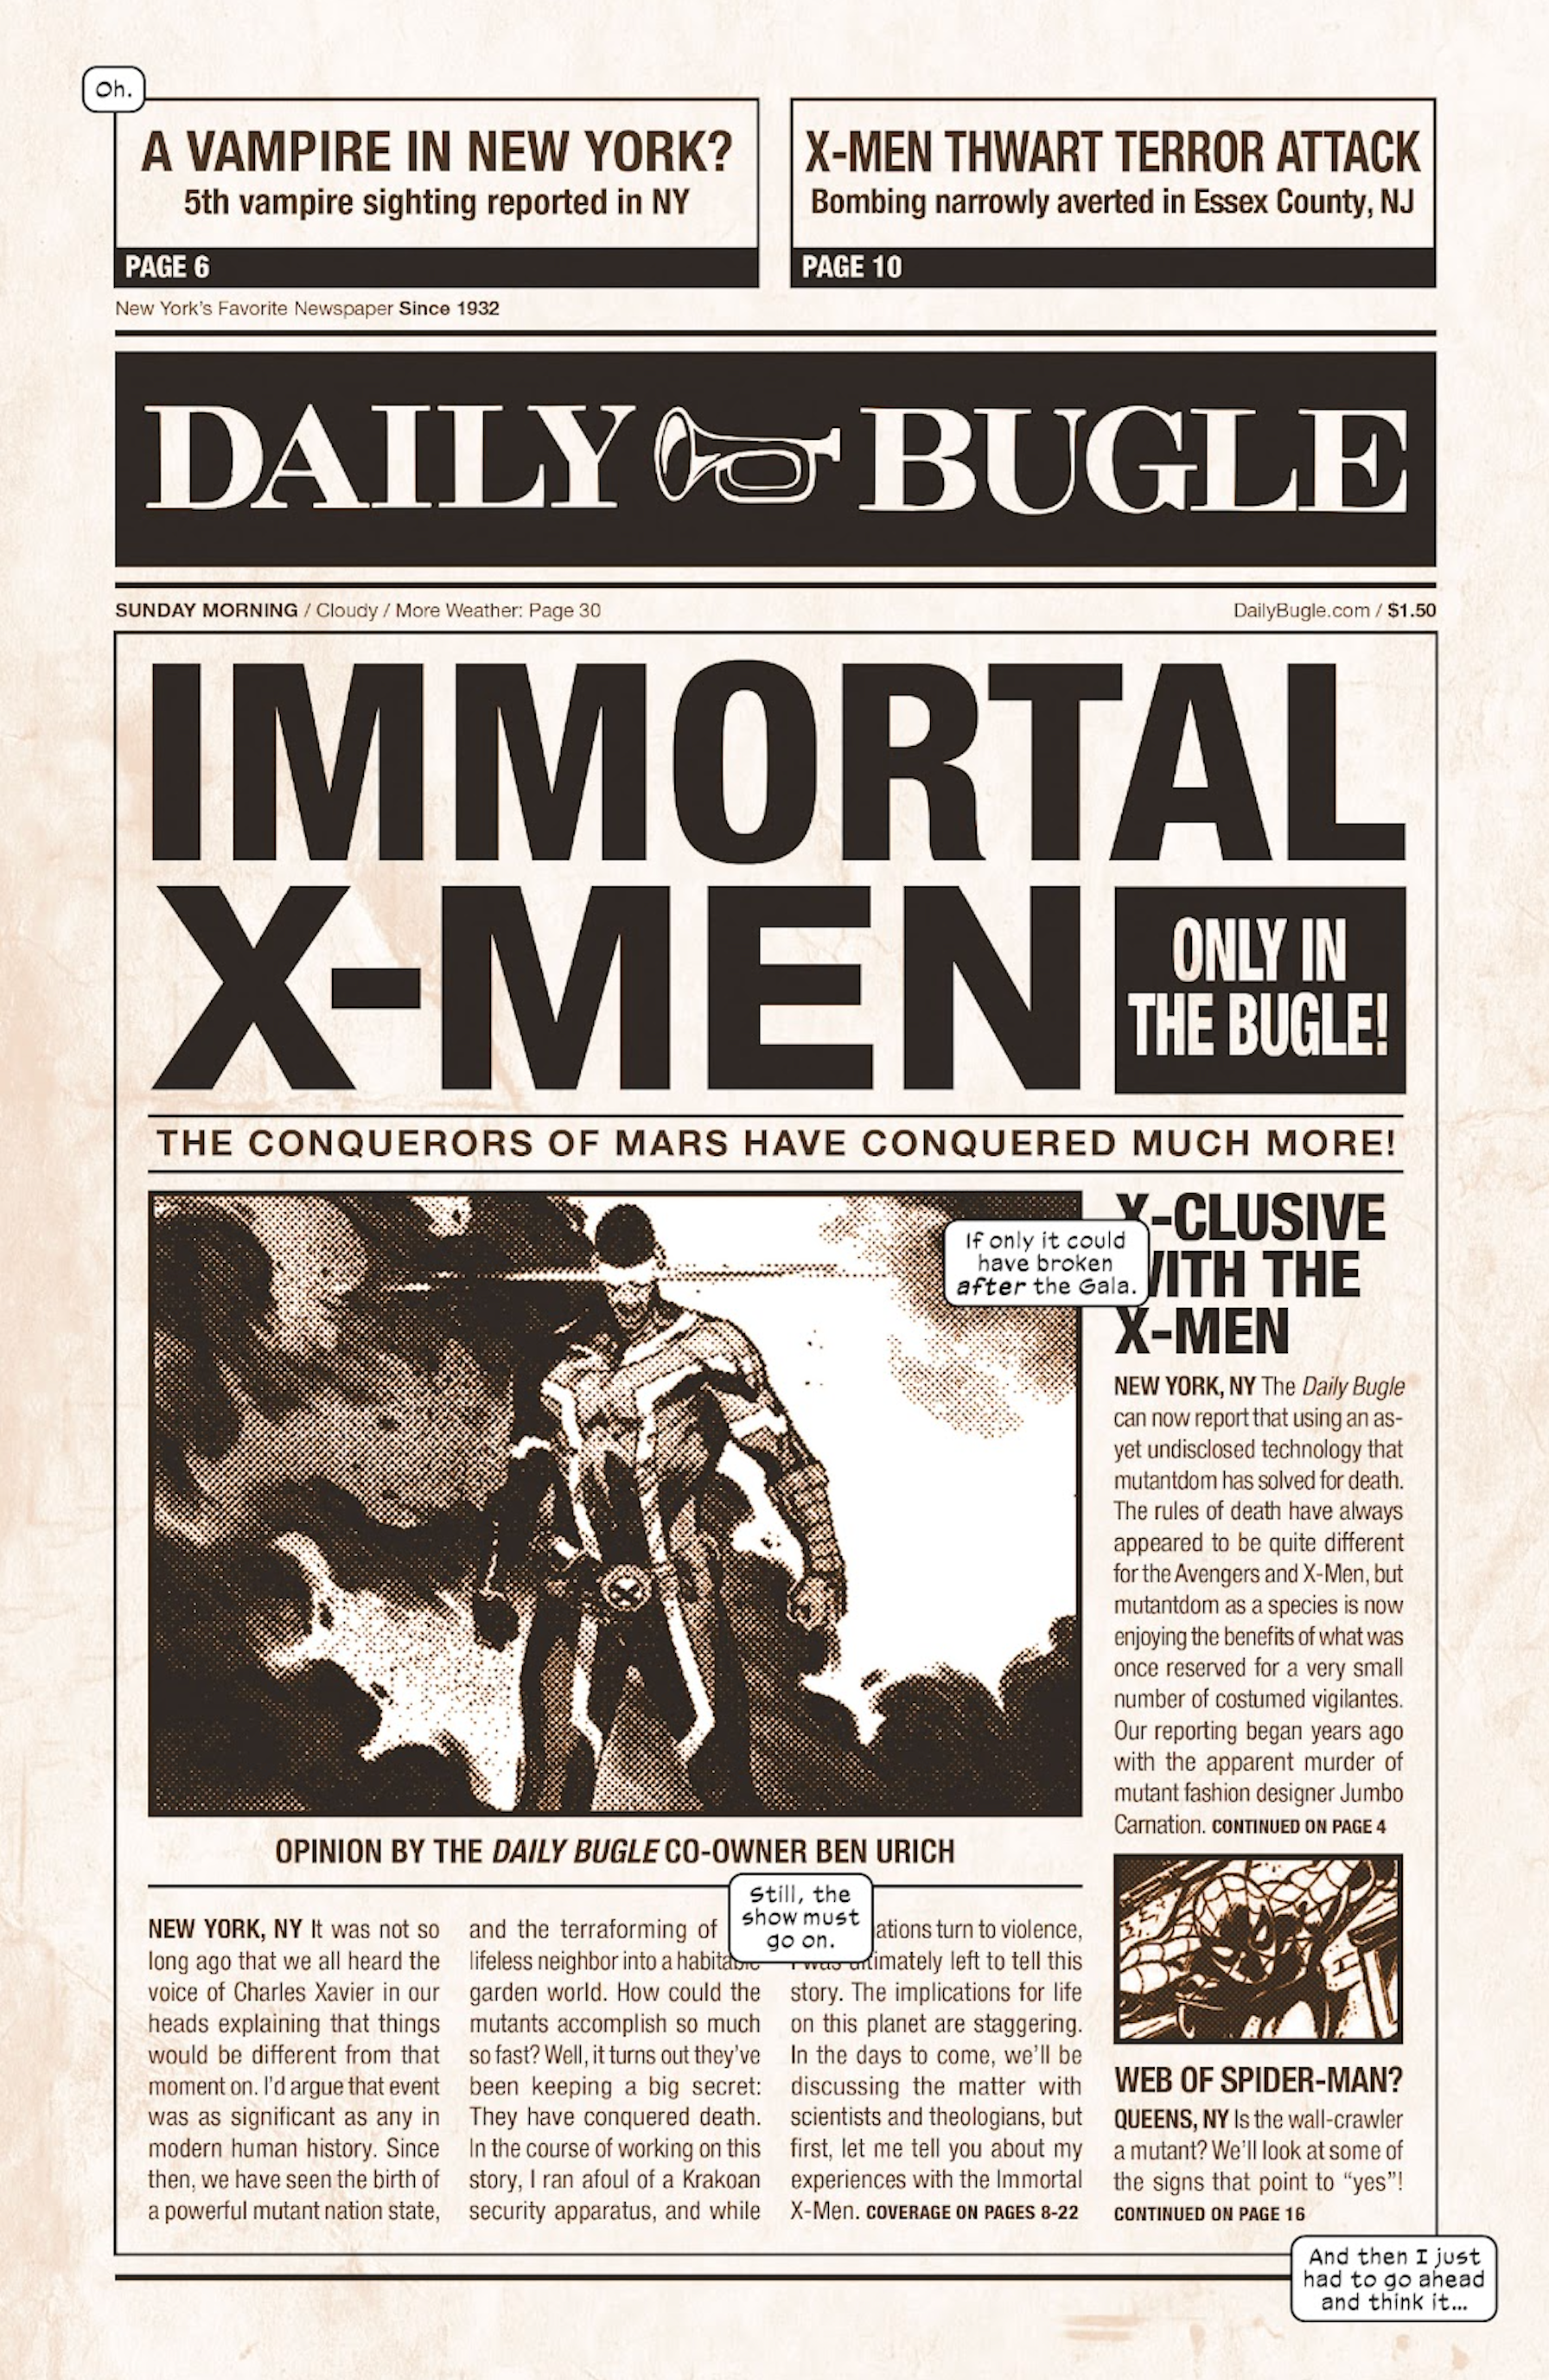 Immortal X Men Daily Bugle headline